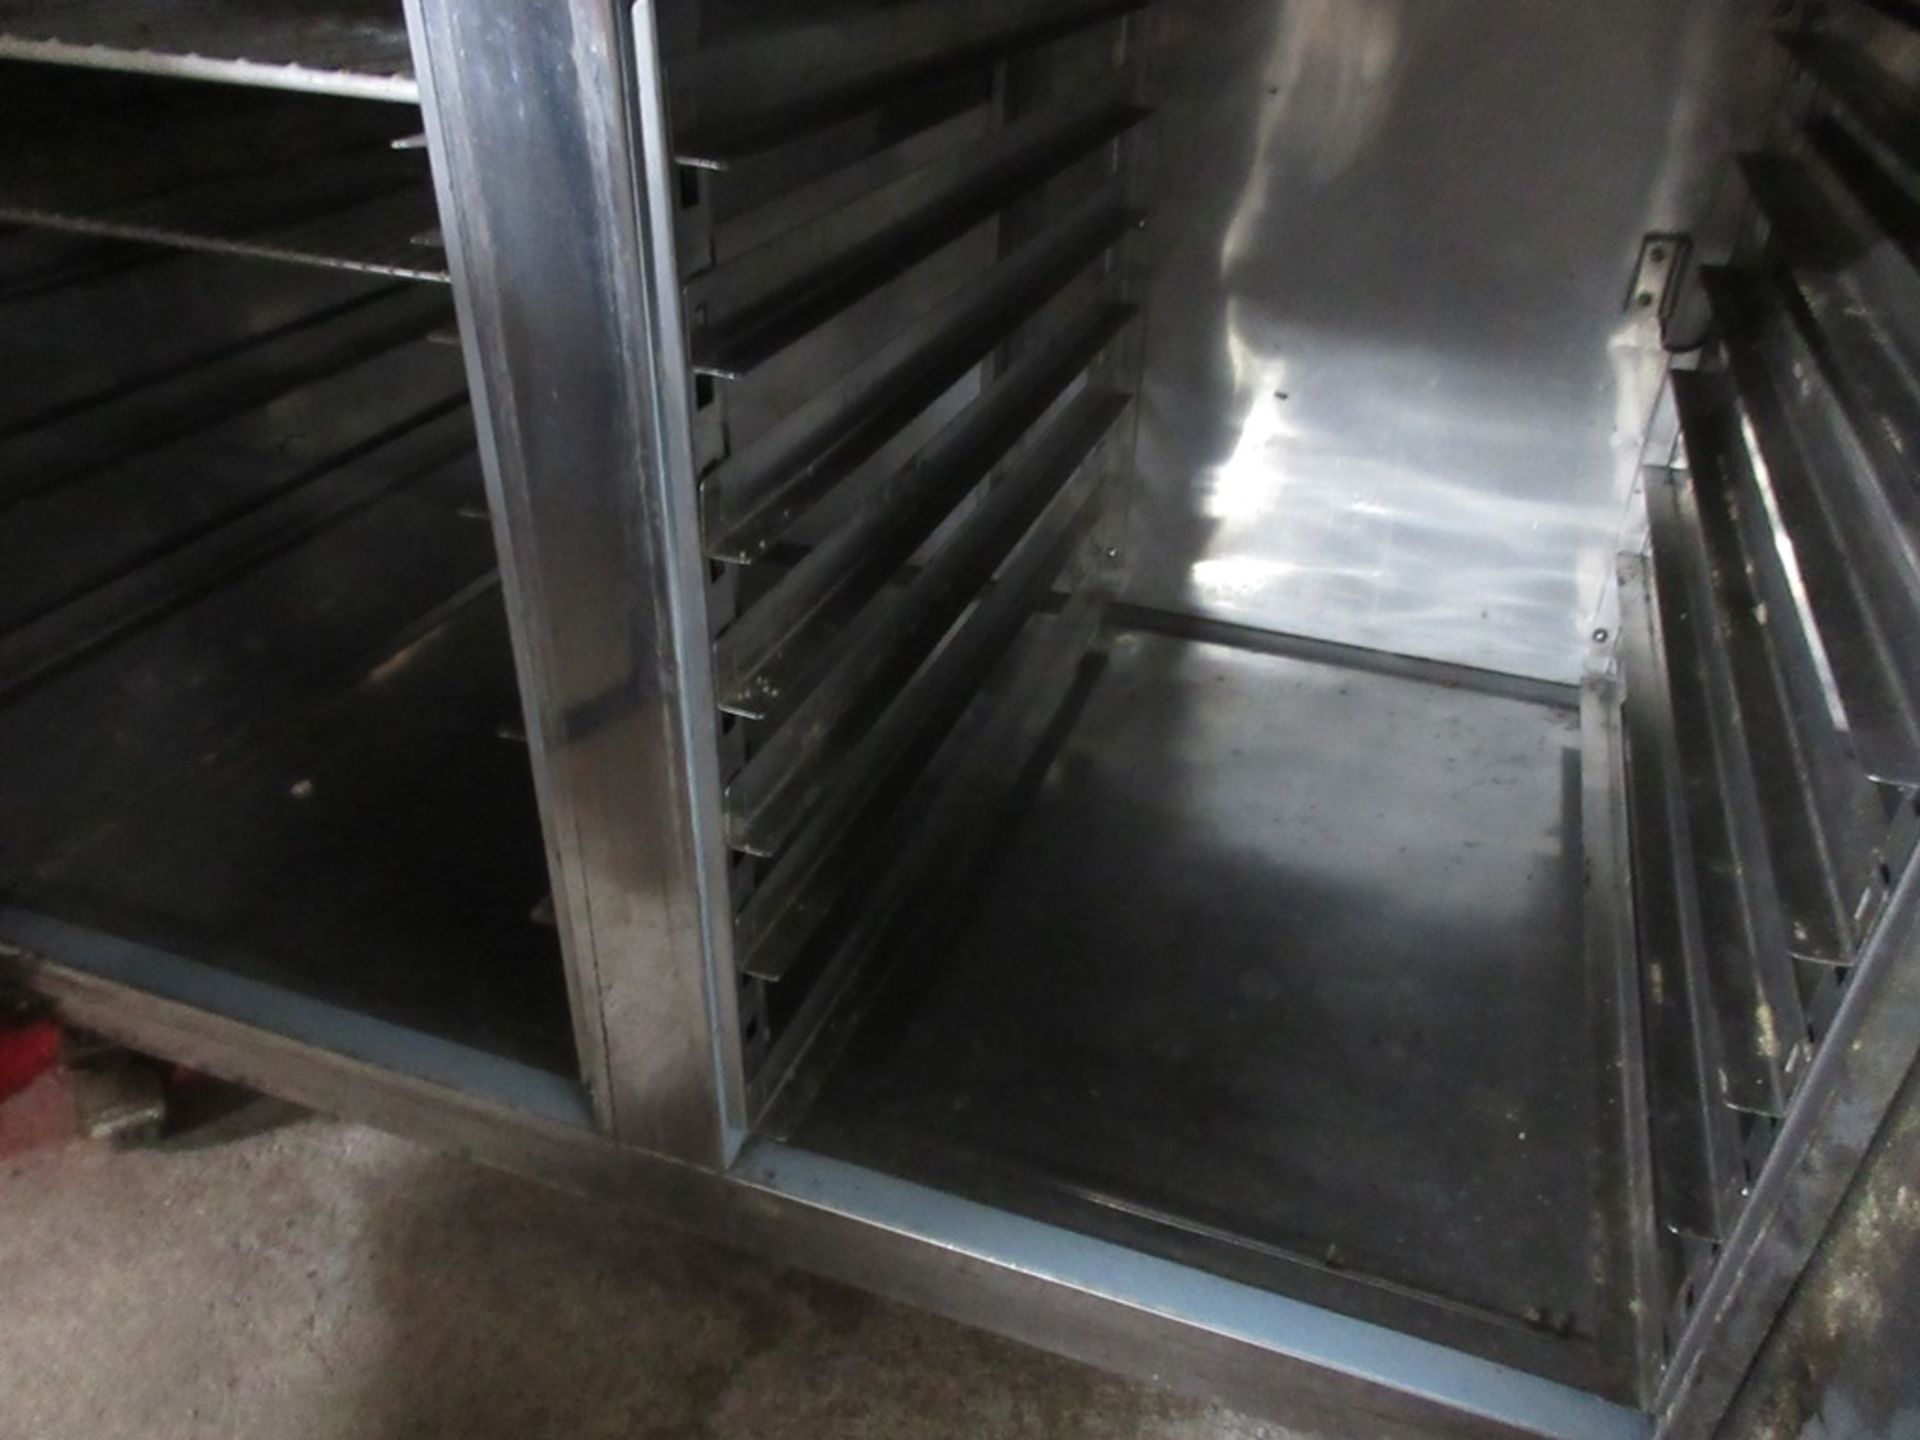 Tefcold stainless steel 2-door mobile fridge, 1.5m x 800